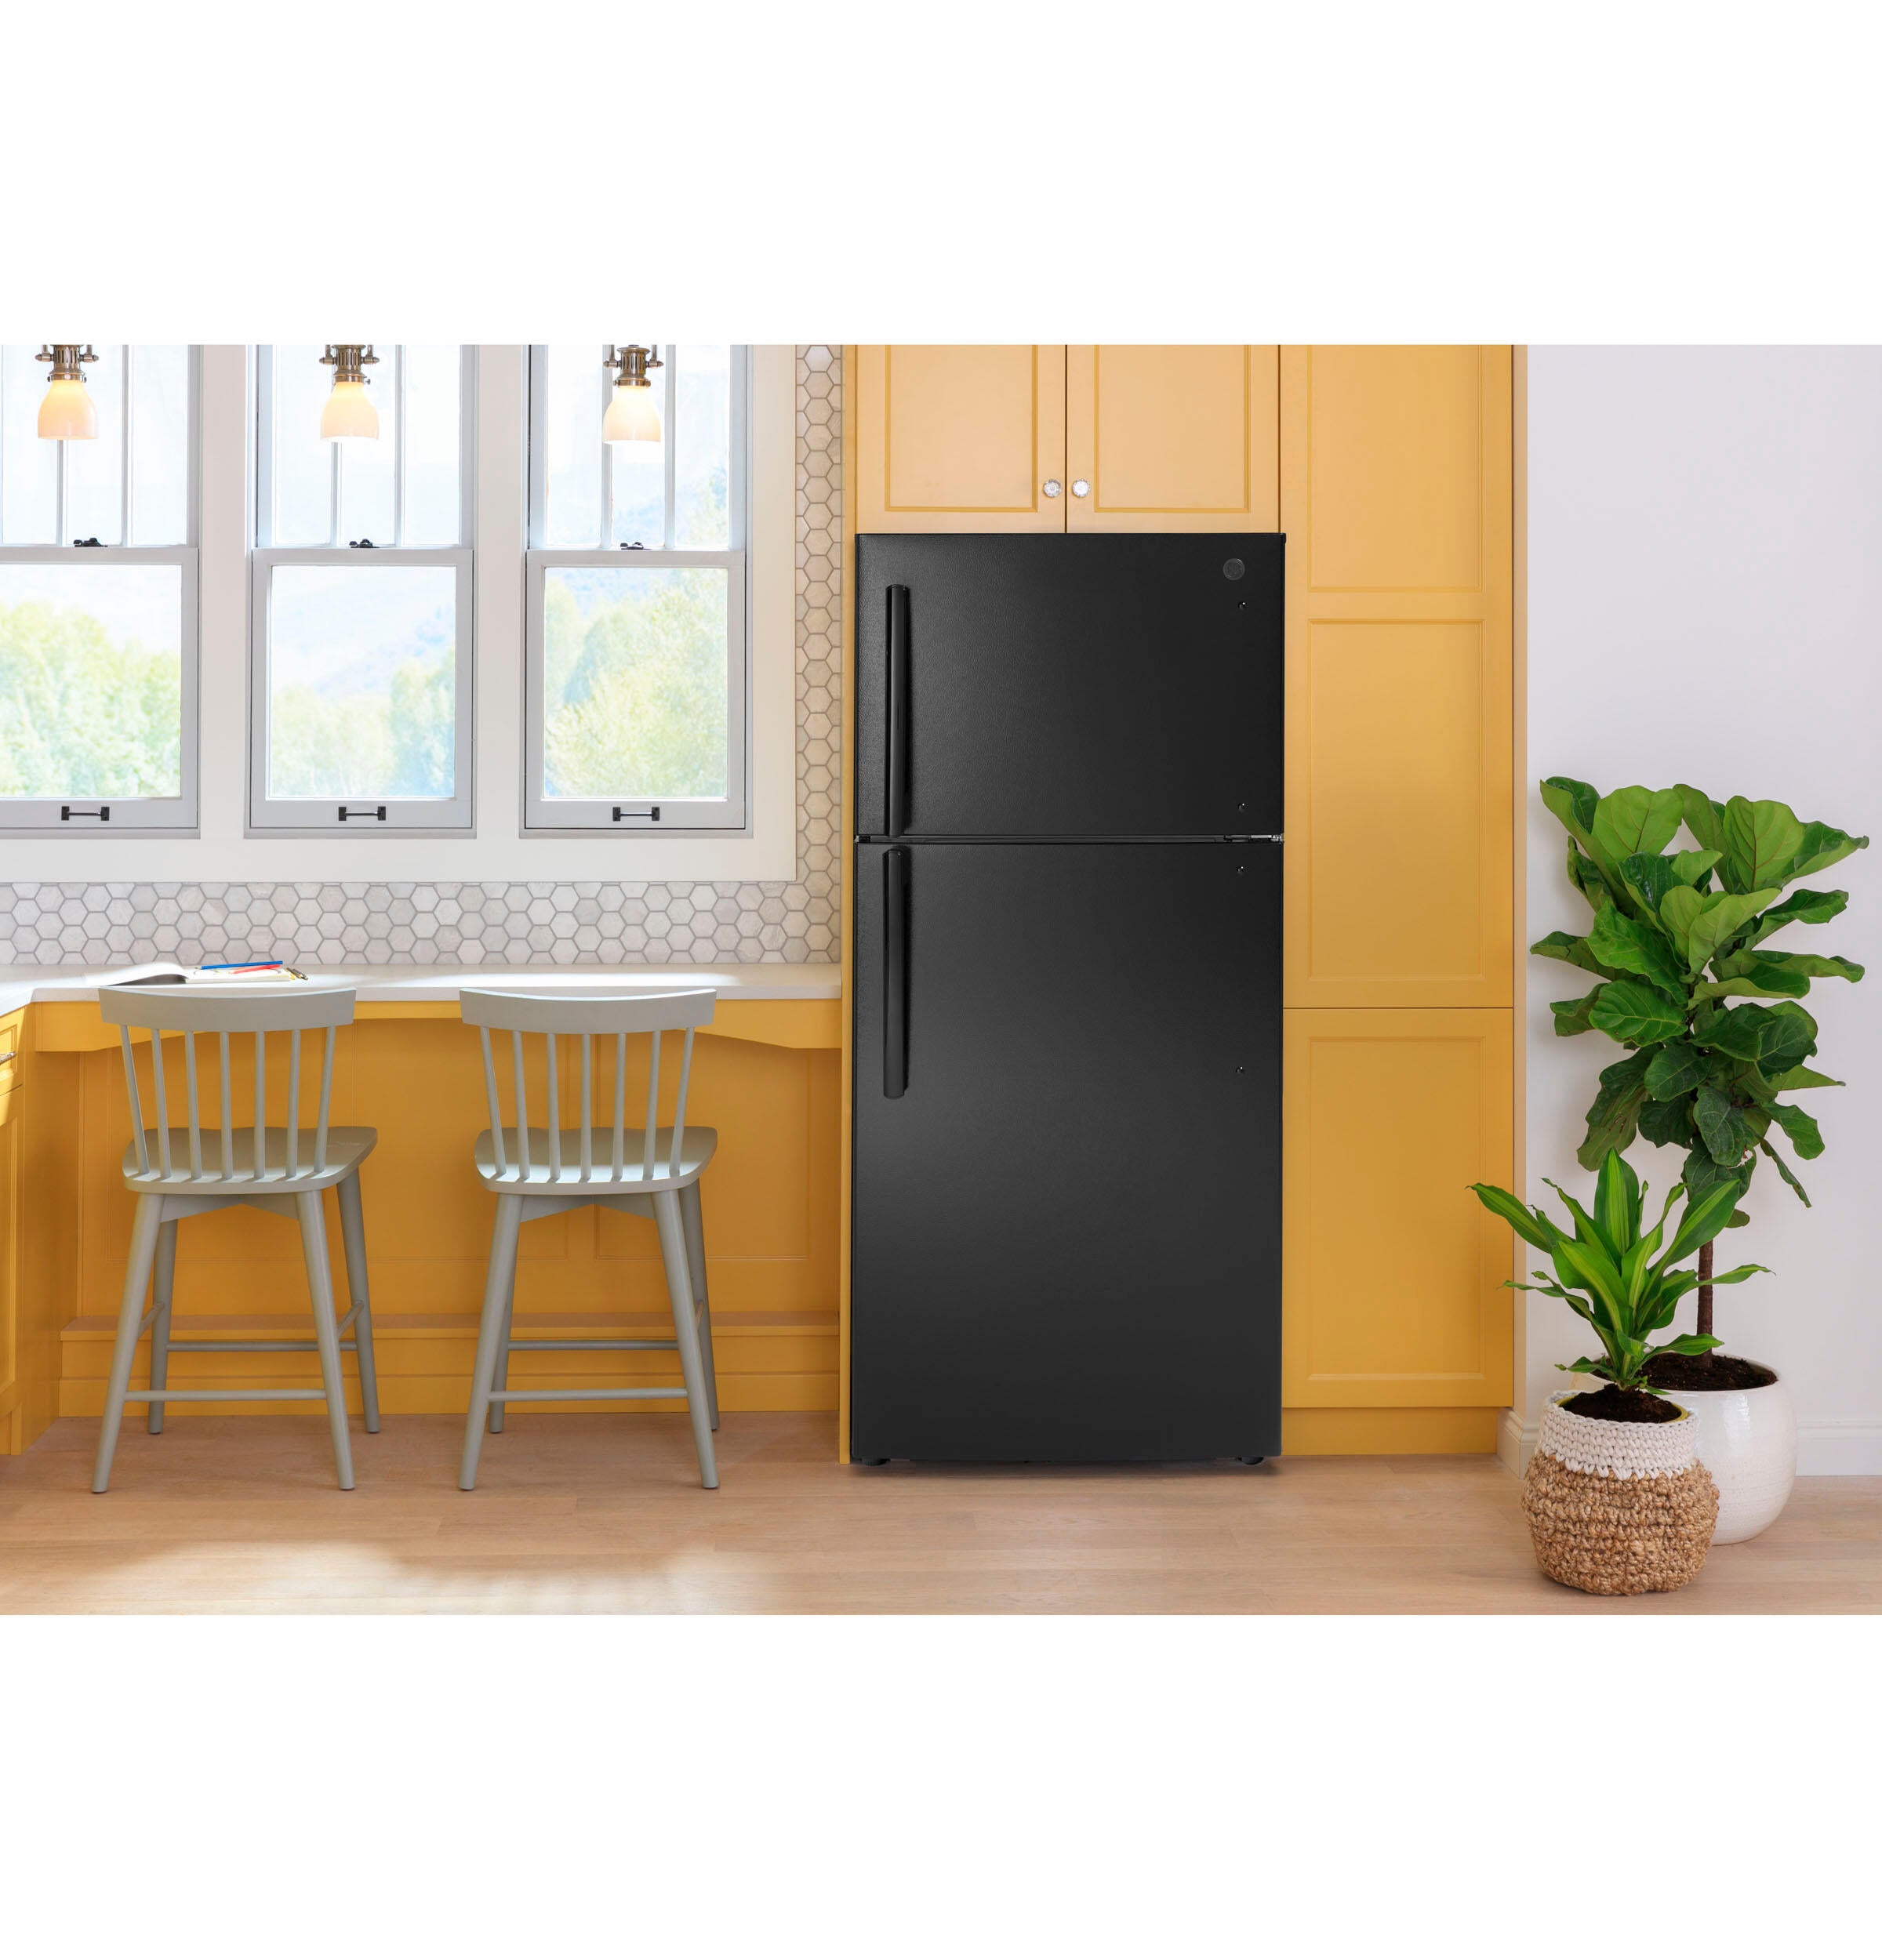 Ge Appliances GTE18MTRRBB Ge® Energy Star® 18.3 Cu. Ft. Top-Freezer Refrigerator